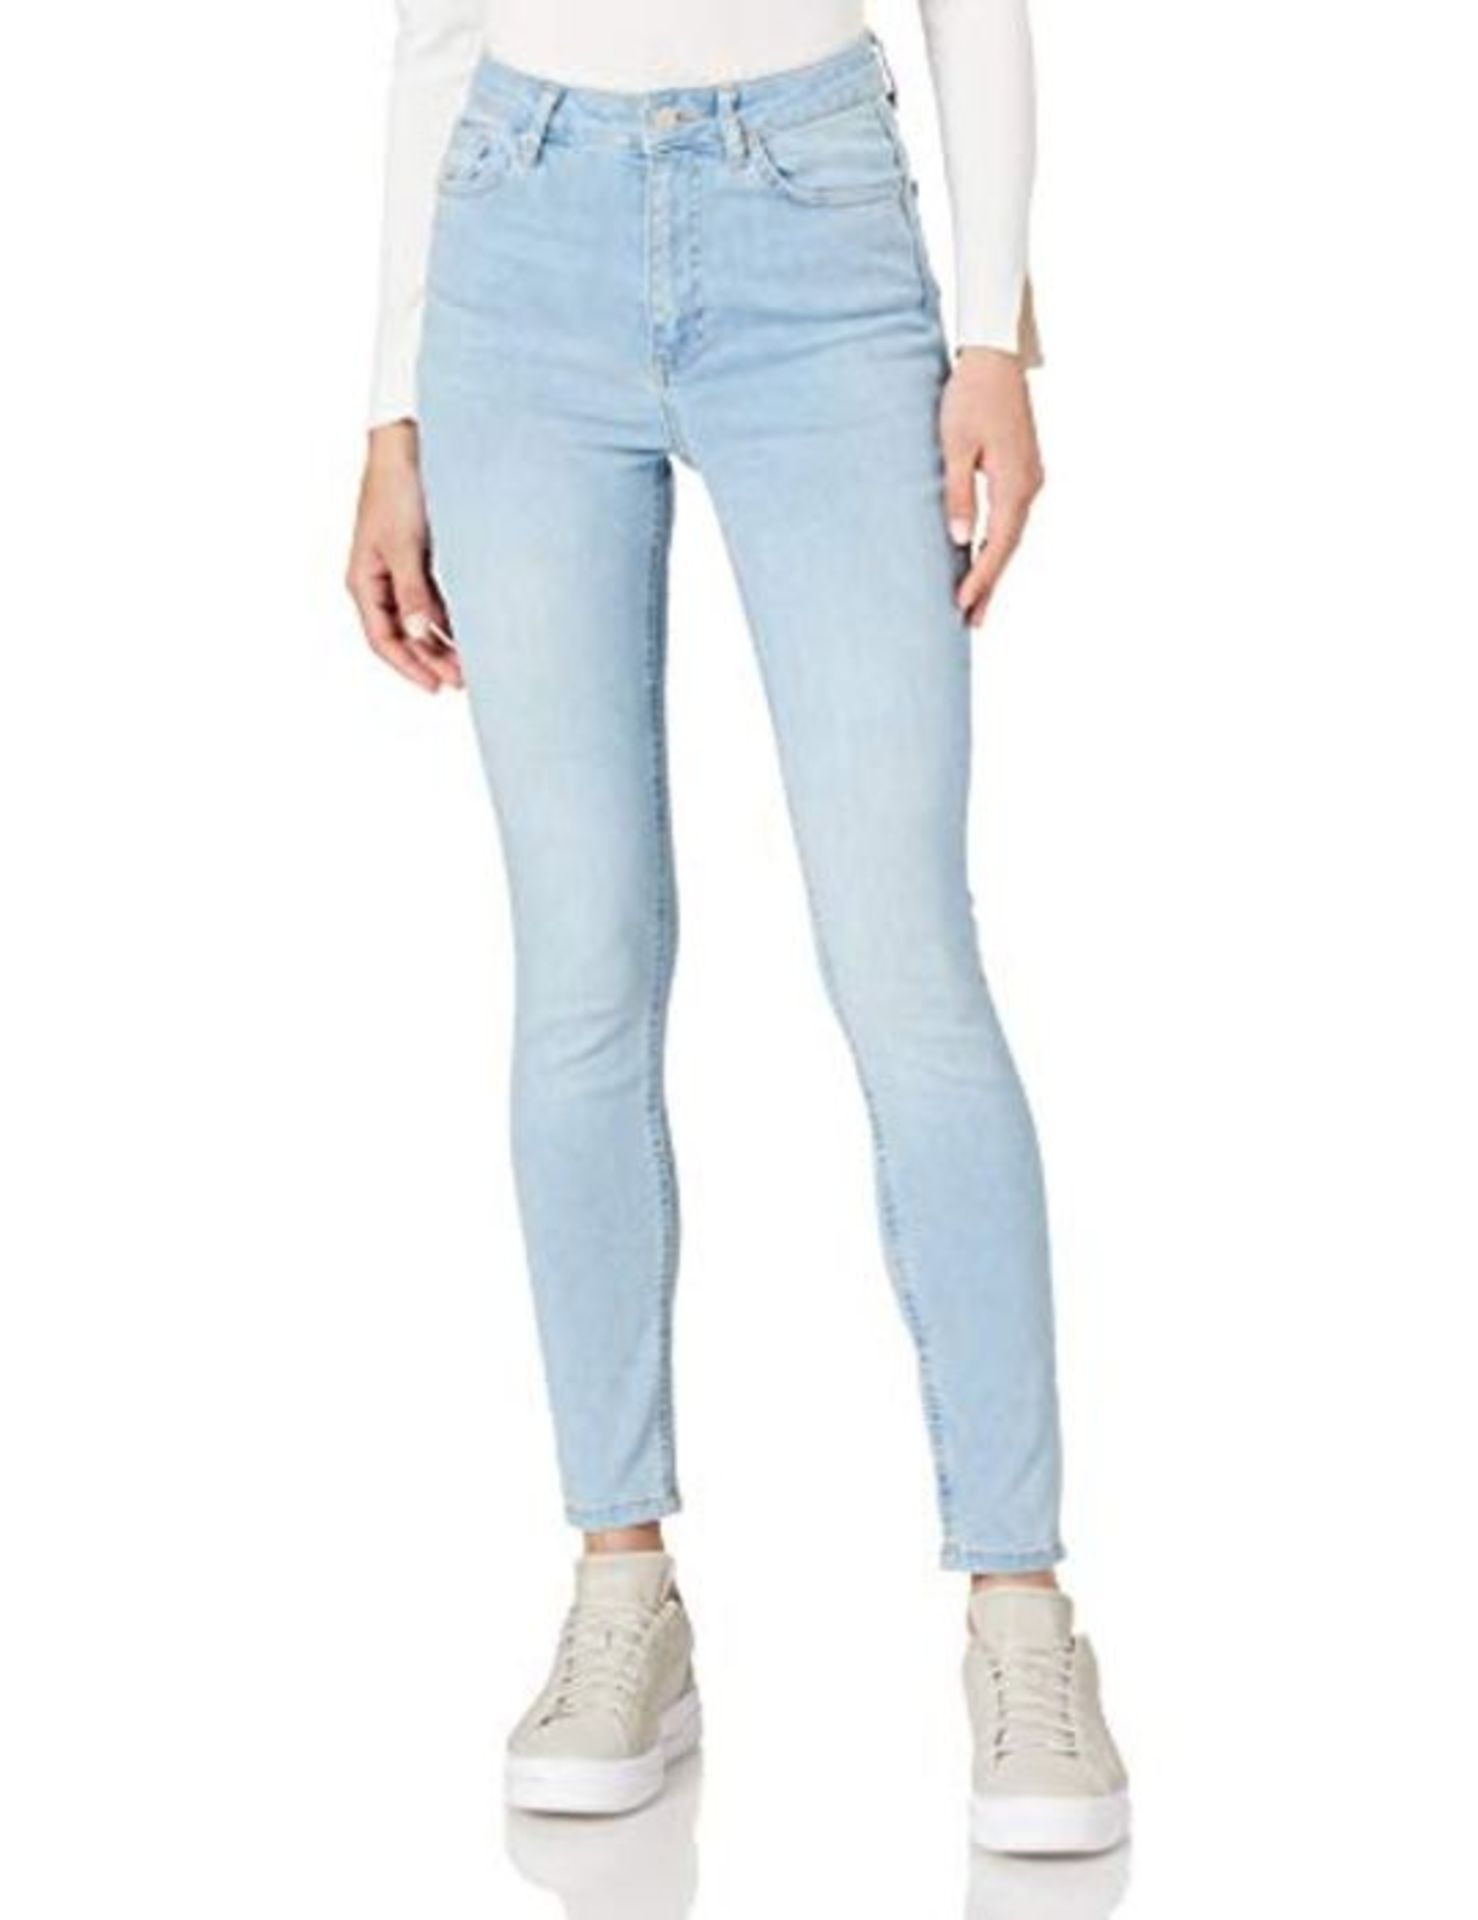 NA-KD Women's Skinny High Waist Jeans, Light Blue, 12 UK